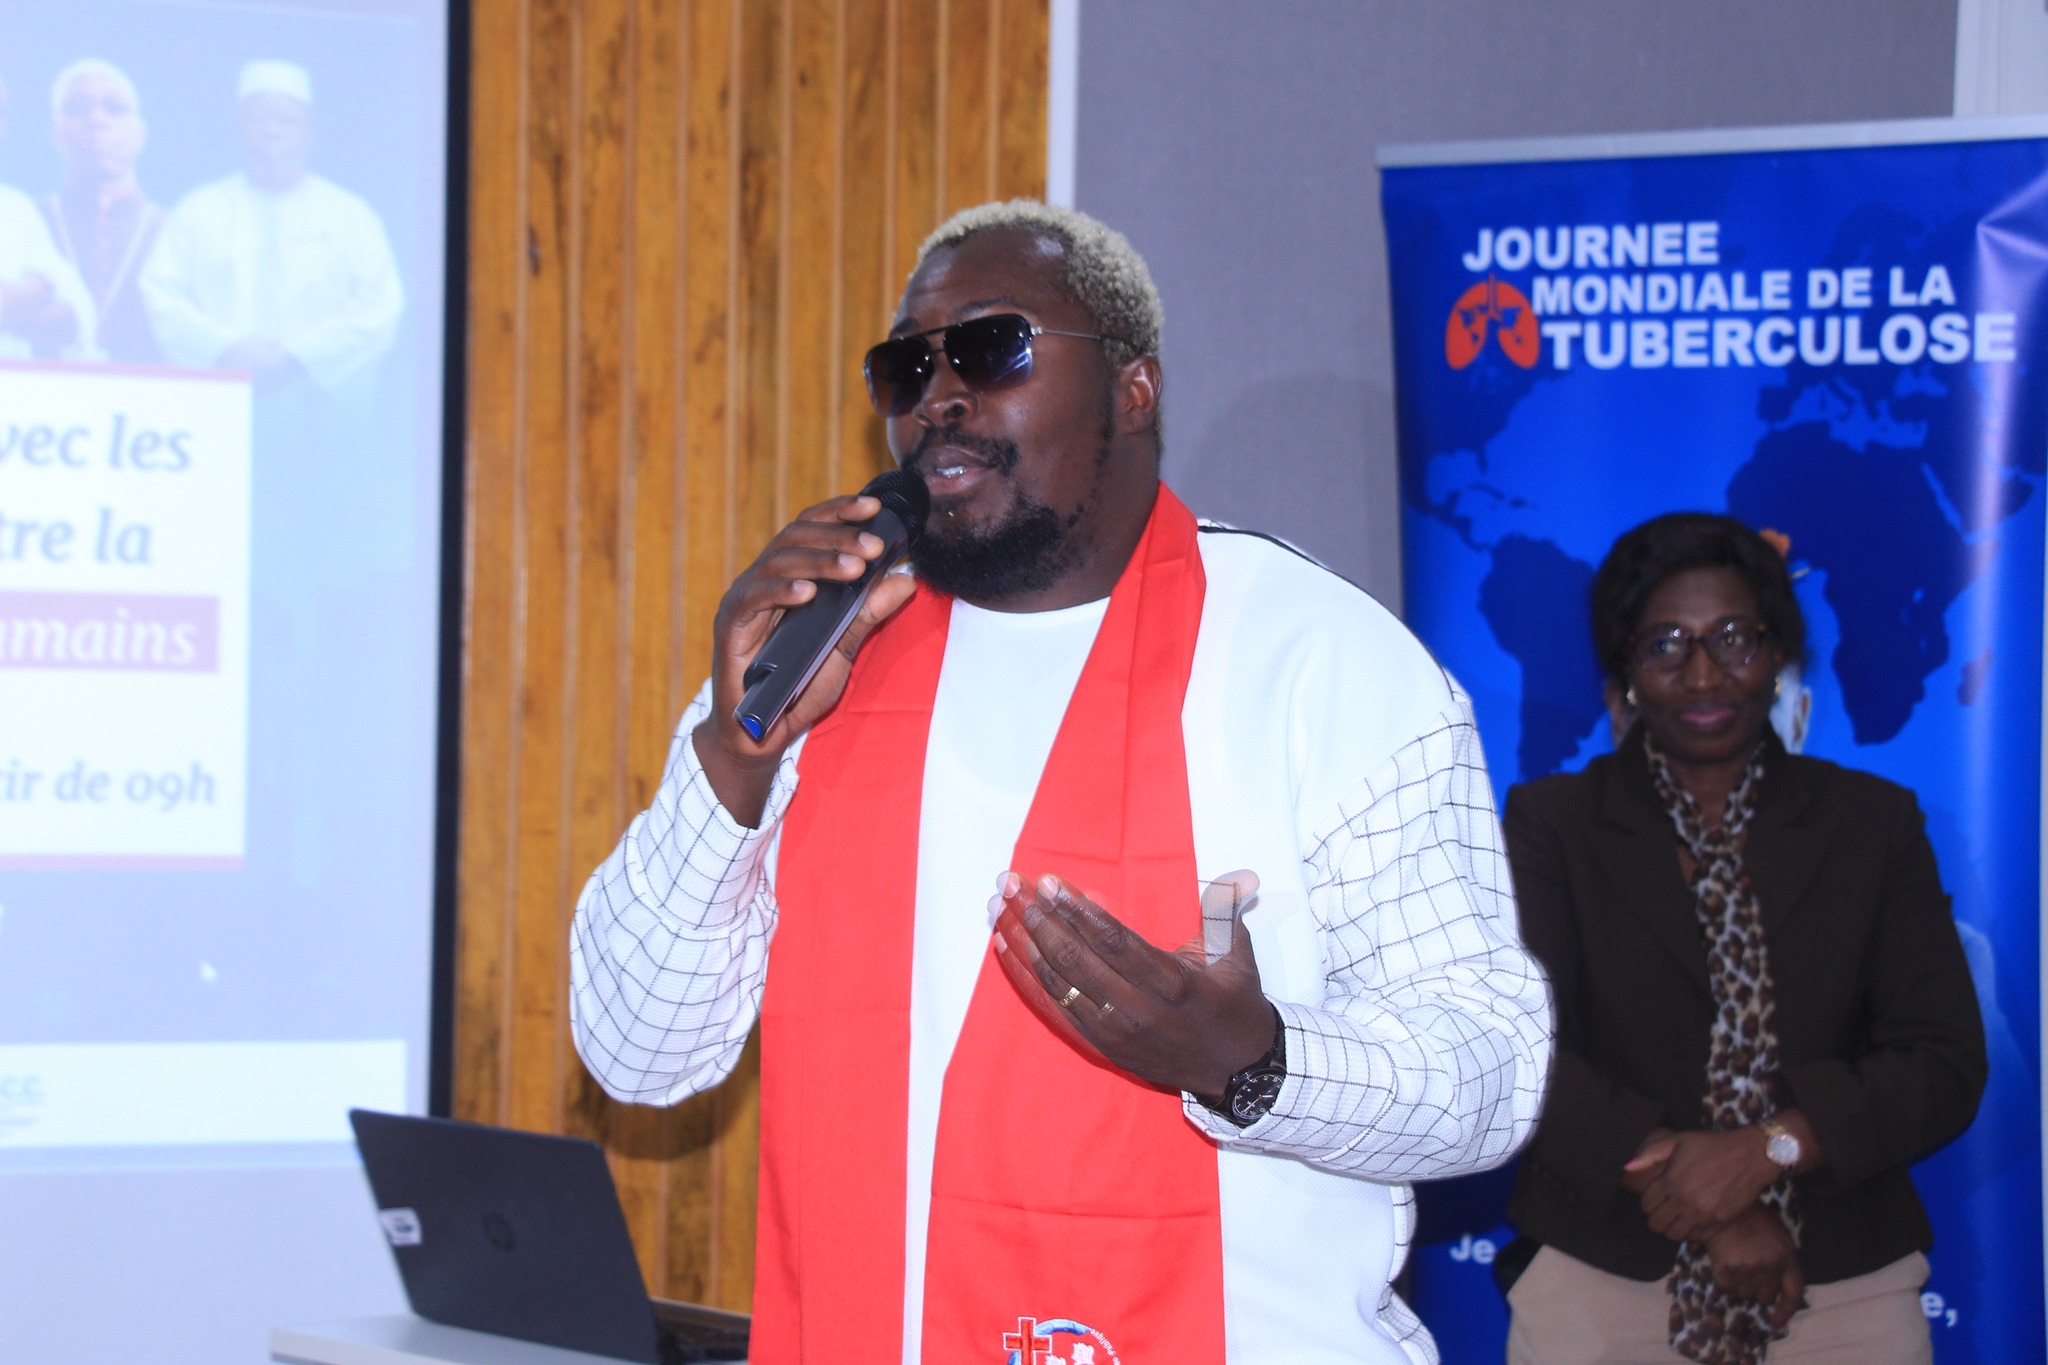 DJ Mukuluku ambassadeur de bonne volonté lutte contre la tuberculose